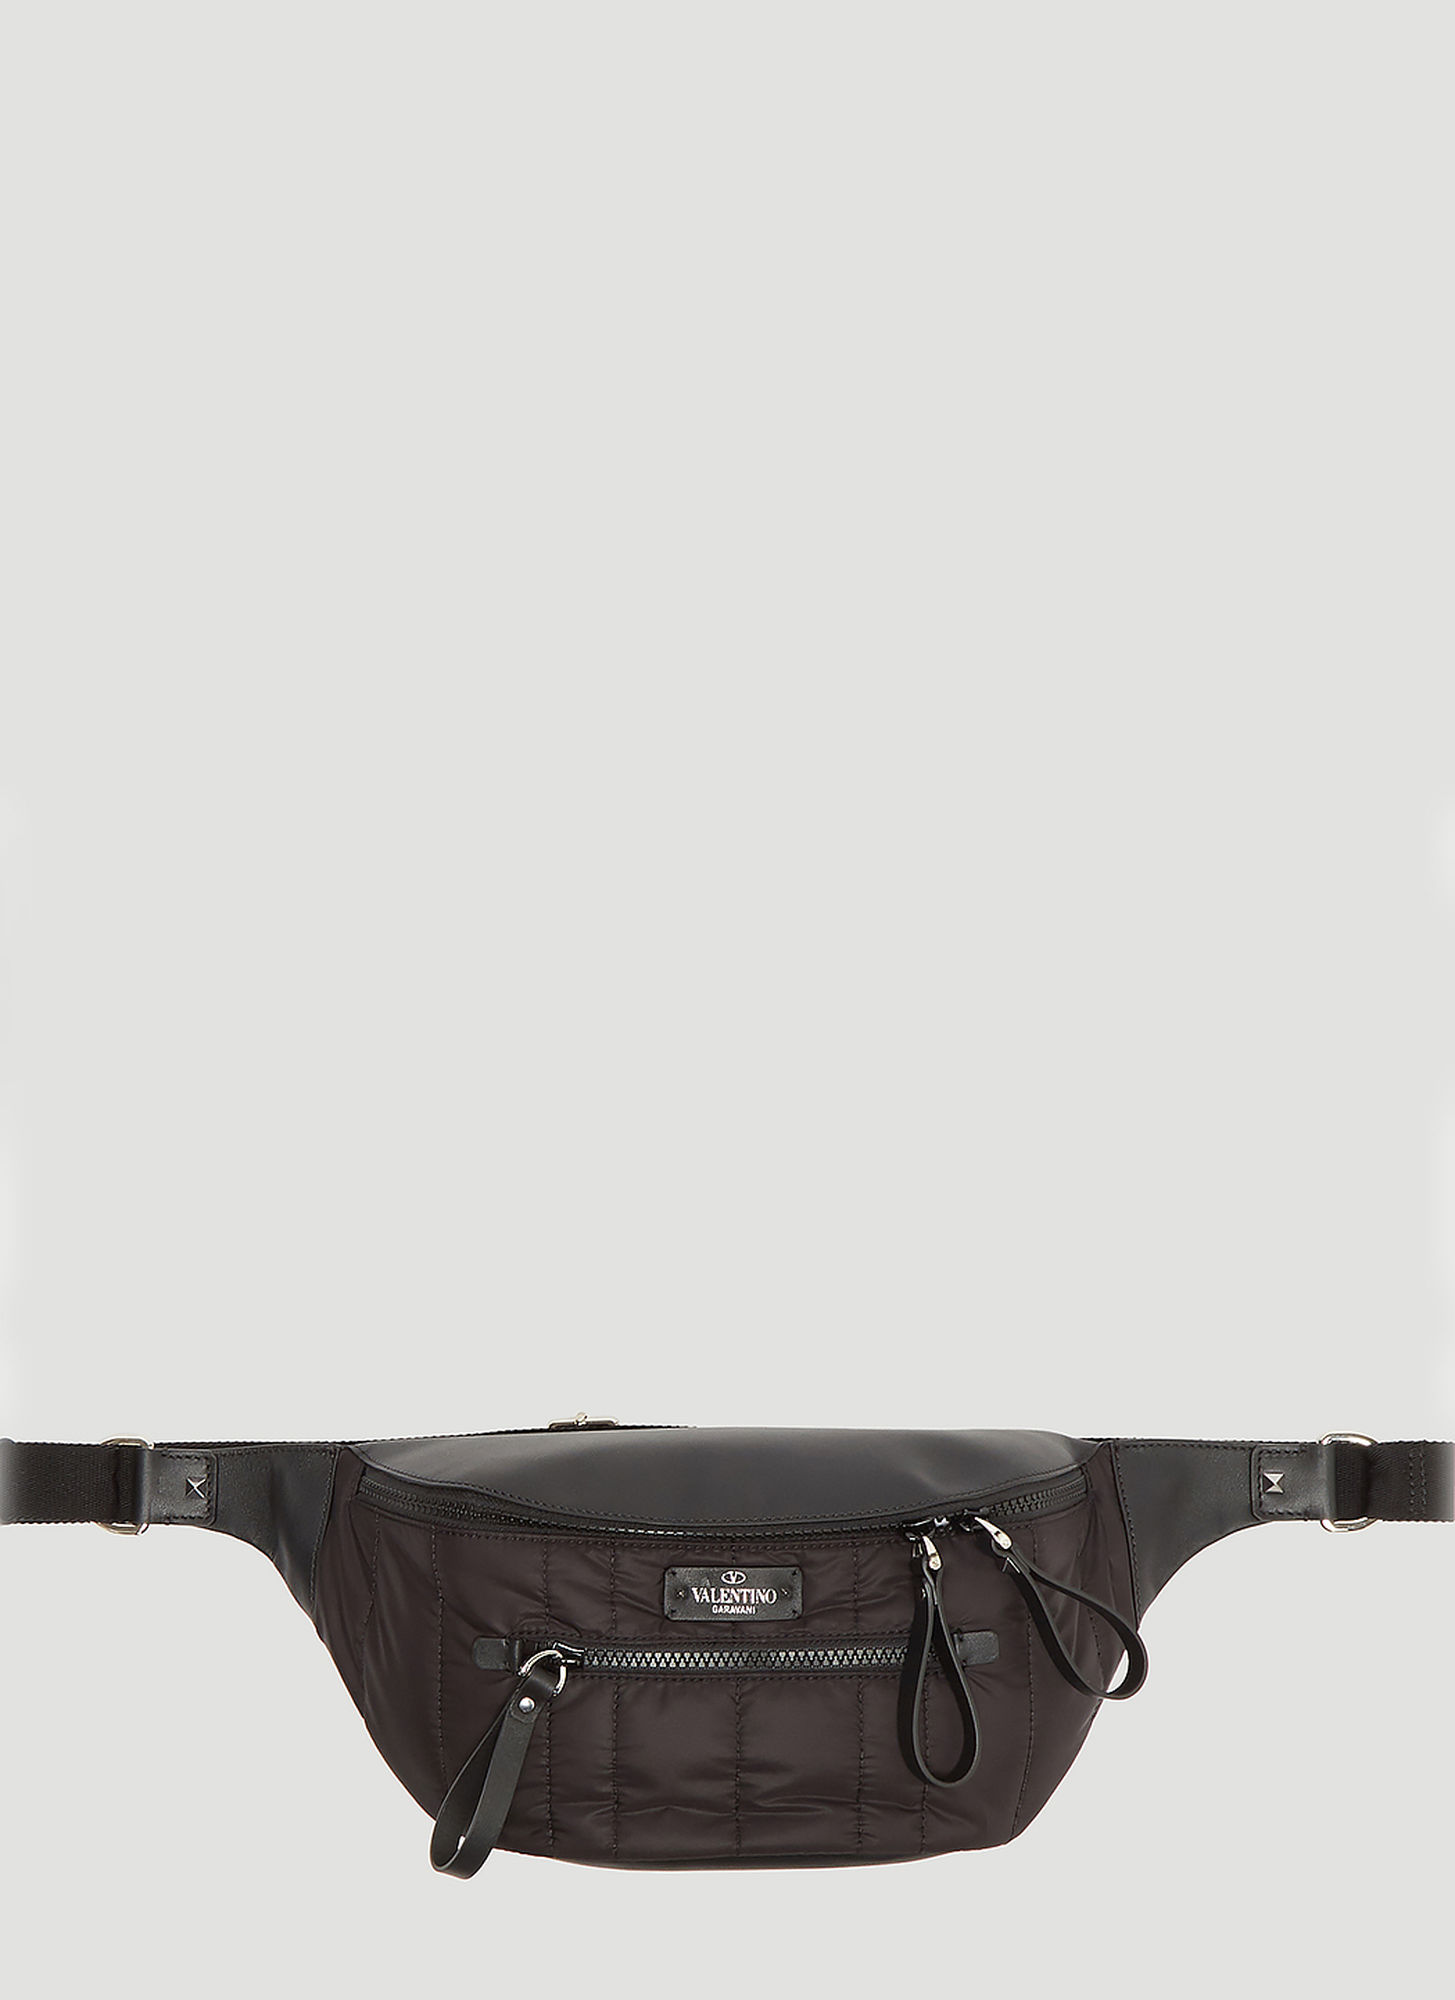 Valentino Nylon Stud Belt Bag in Black size One Size | The Fashionisto